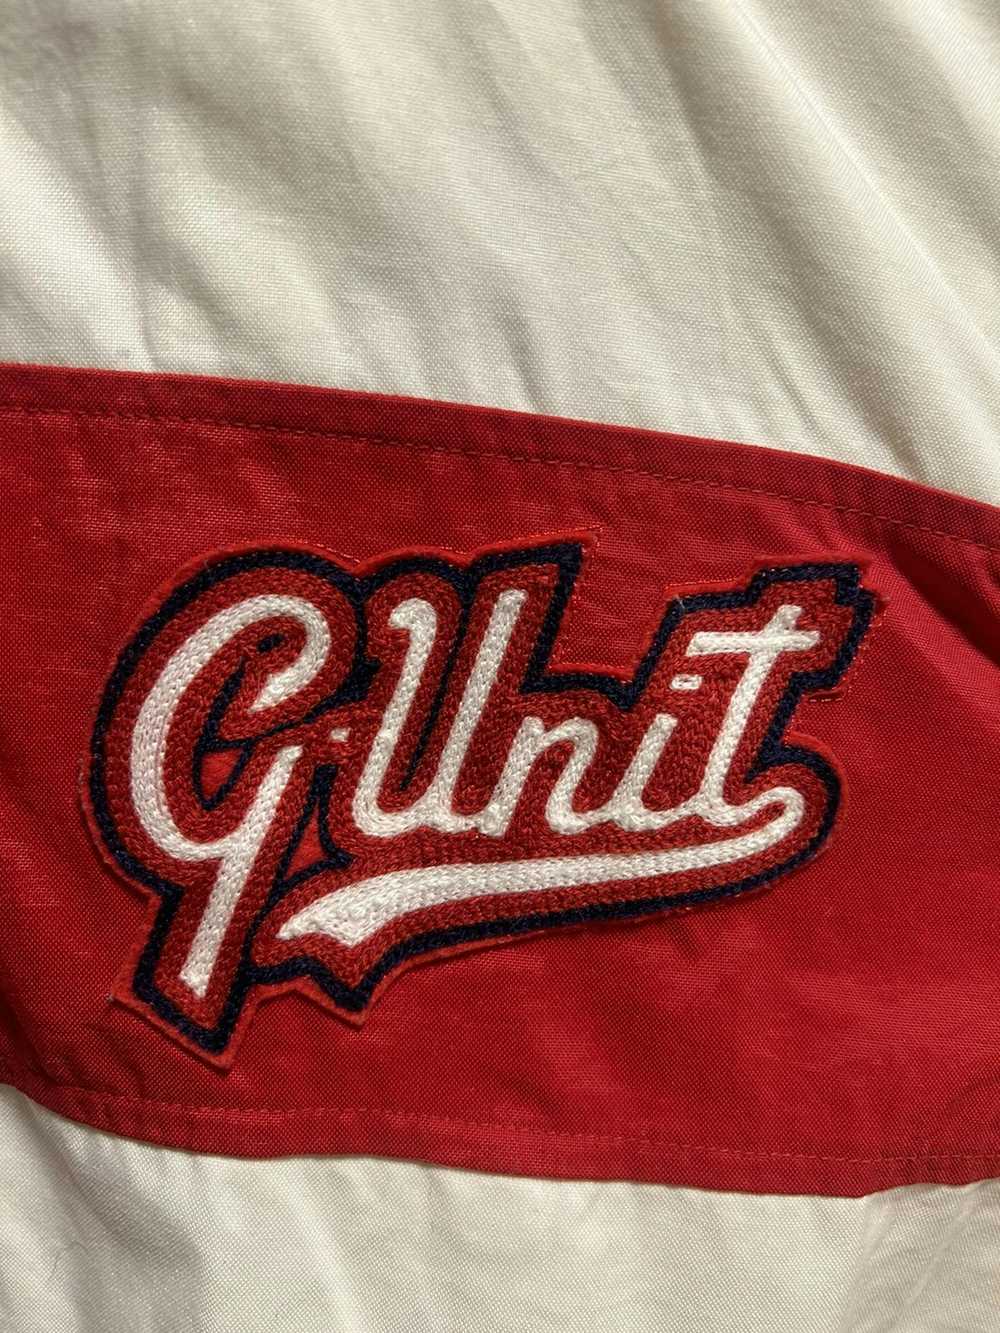 G Unit Vintage G Unit jacket - image 3